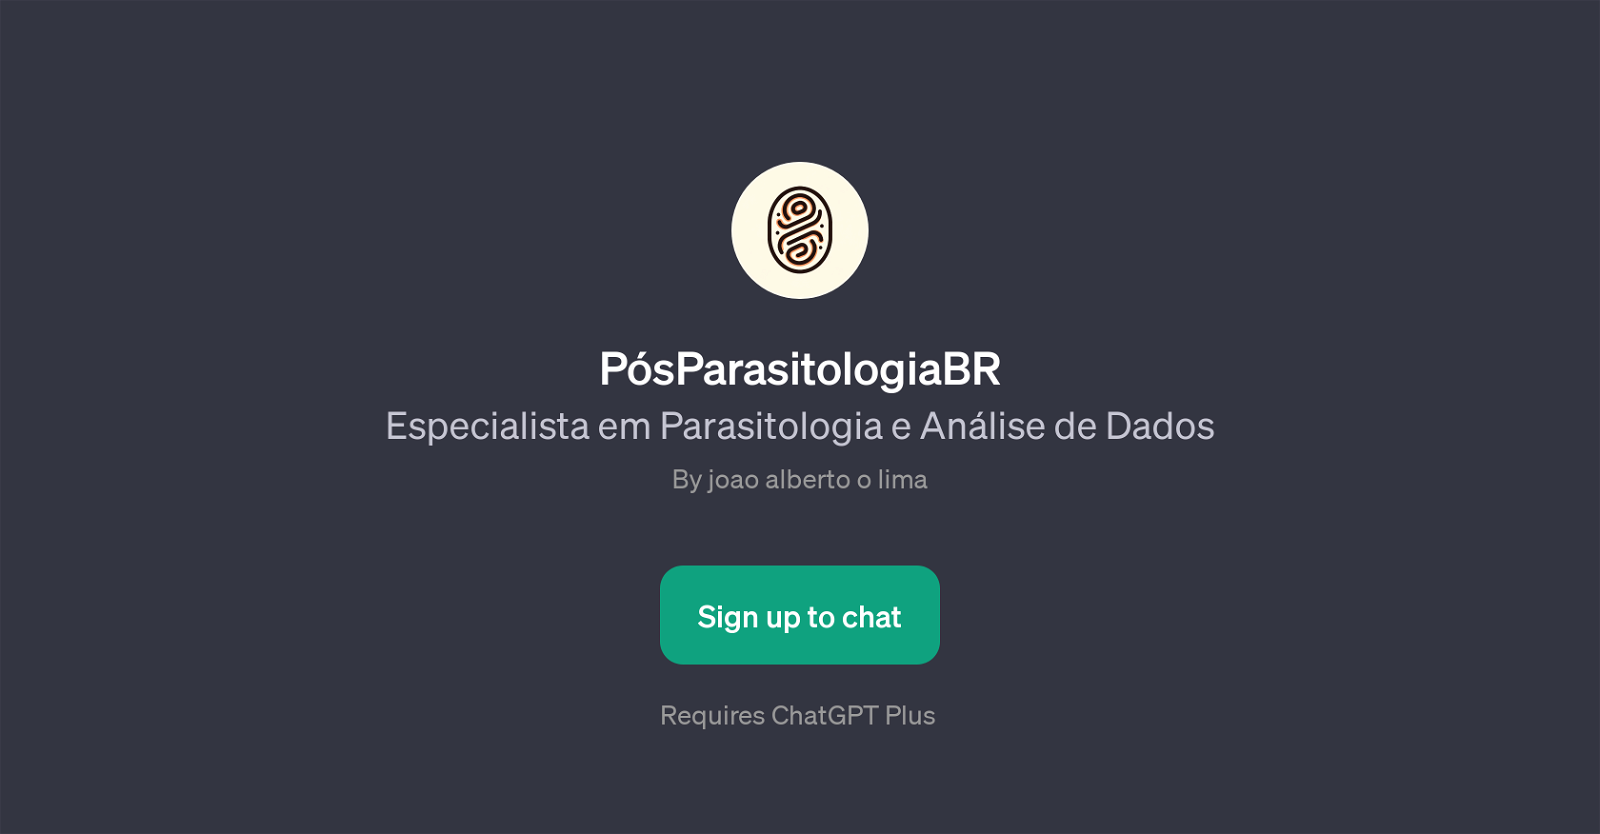 PsParasitologiaBR website